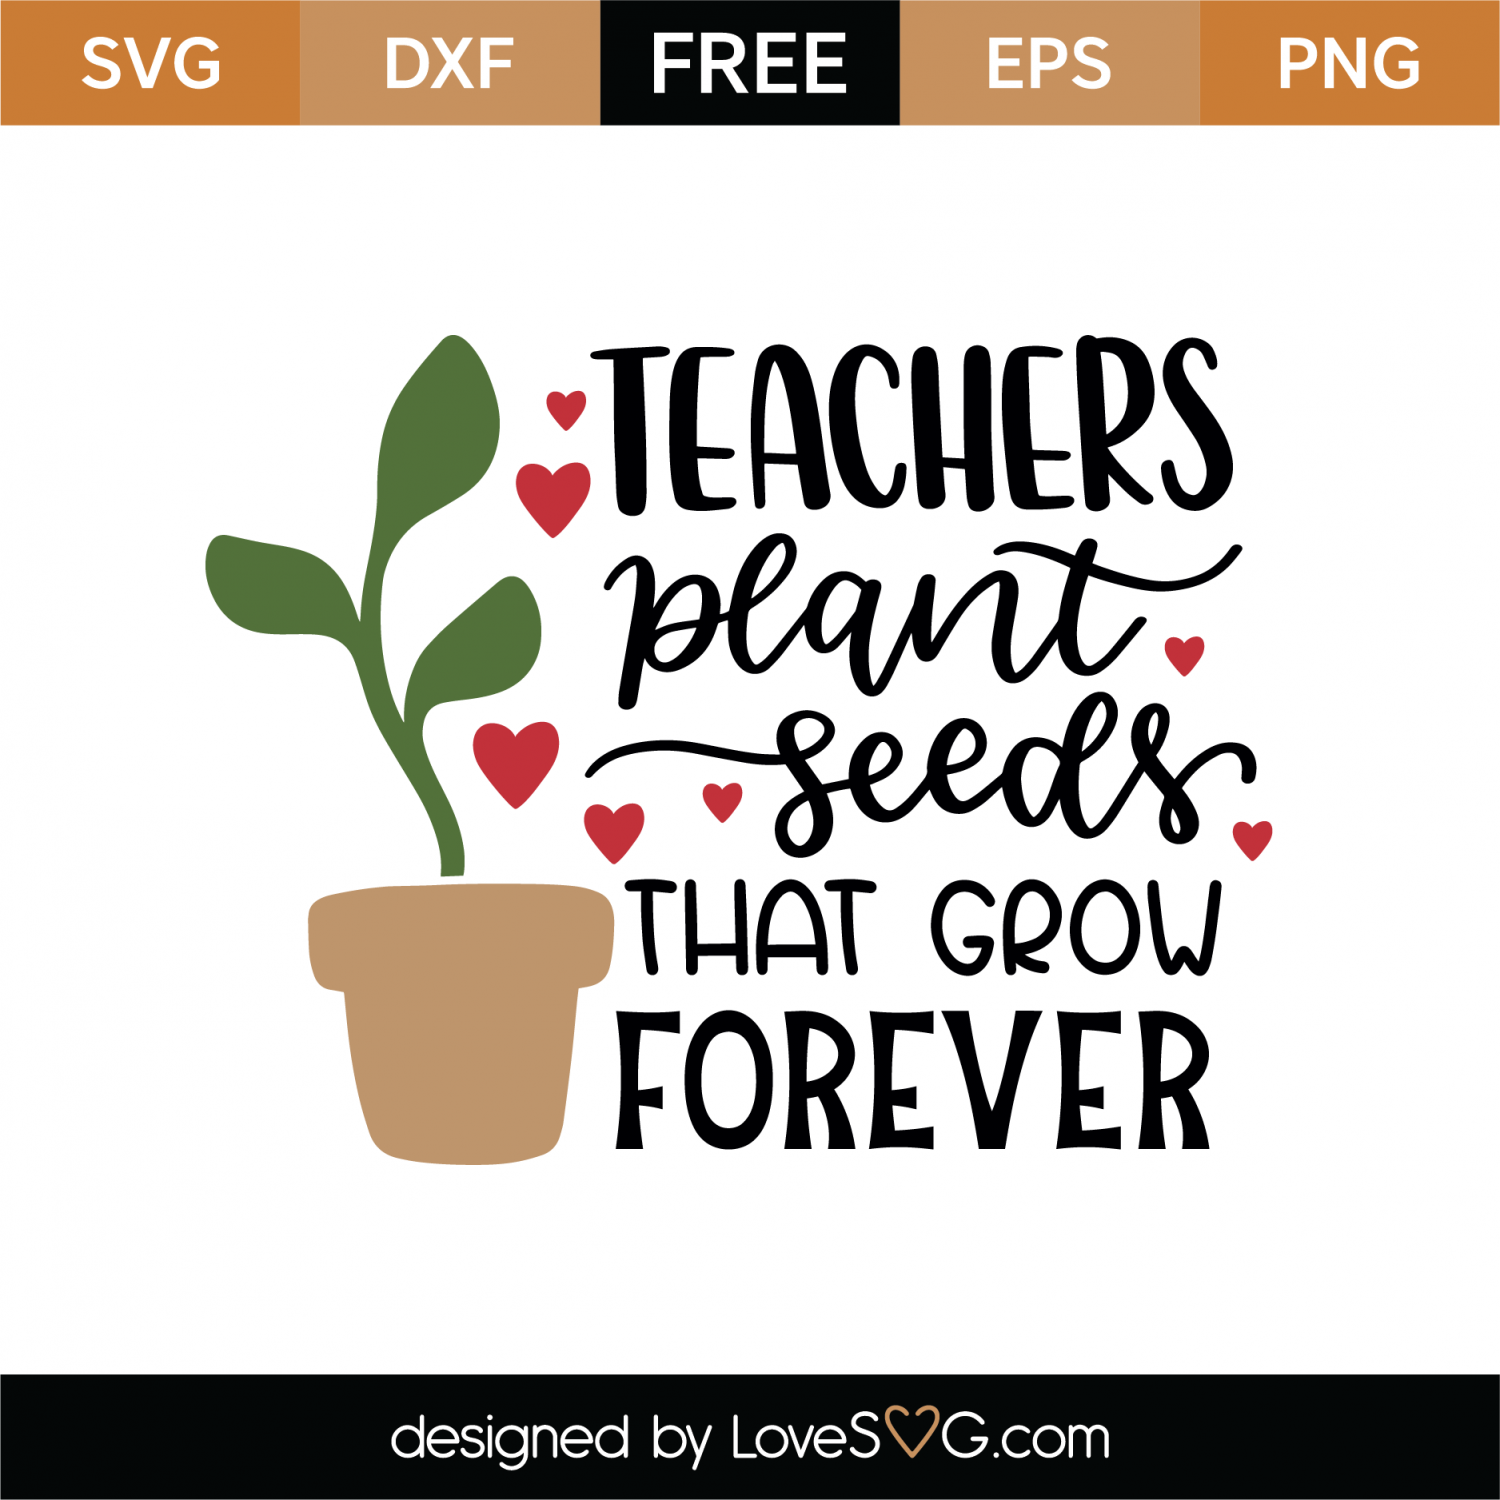 Download Free Teachers Plant Seeds SVG Cut File | Lovesvg.com